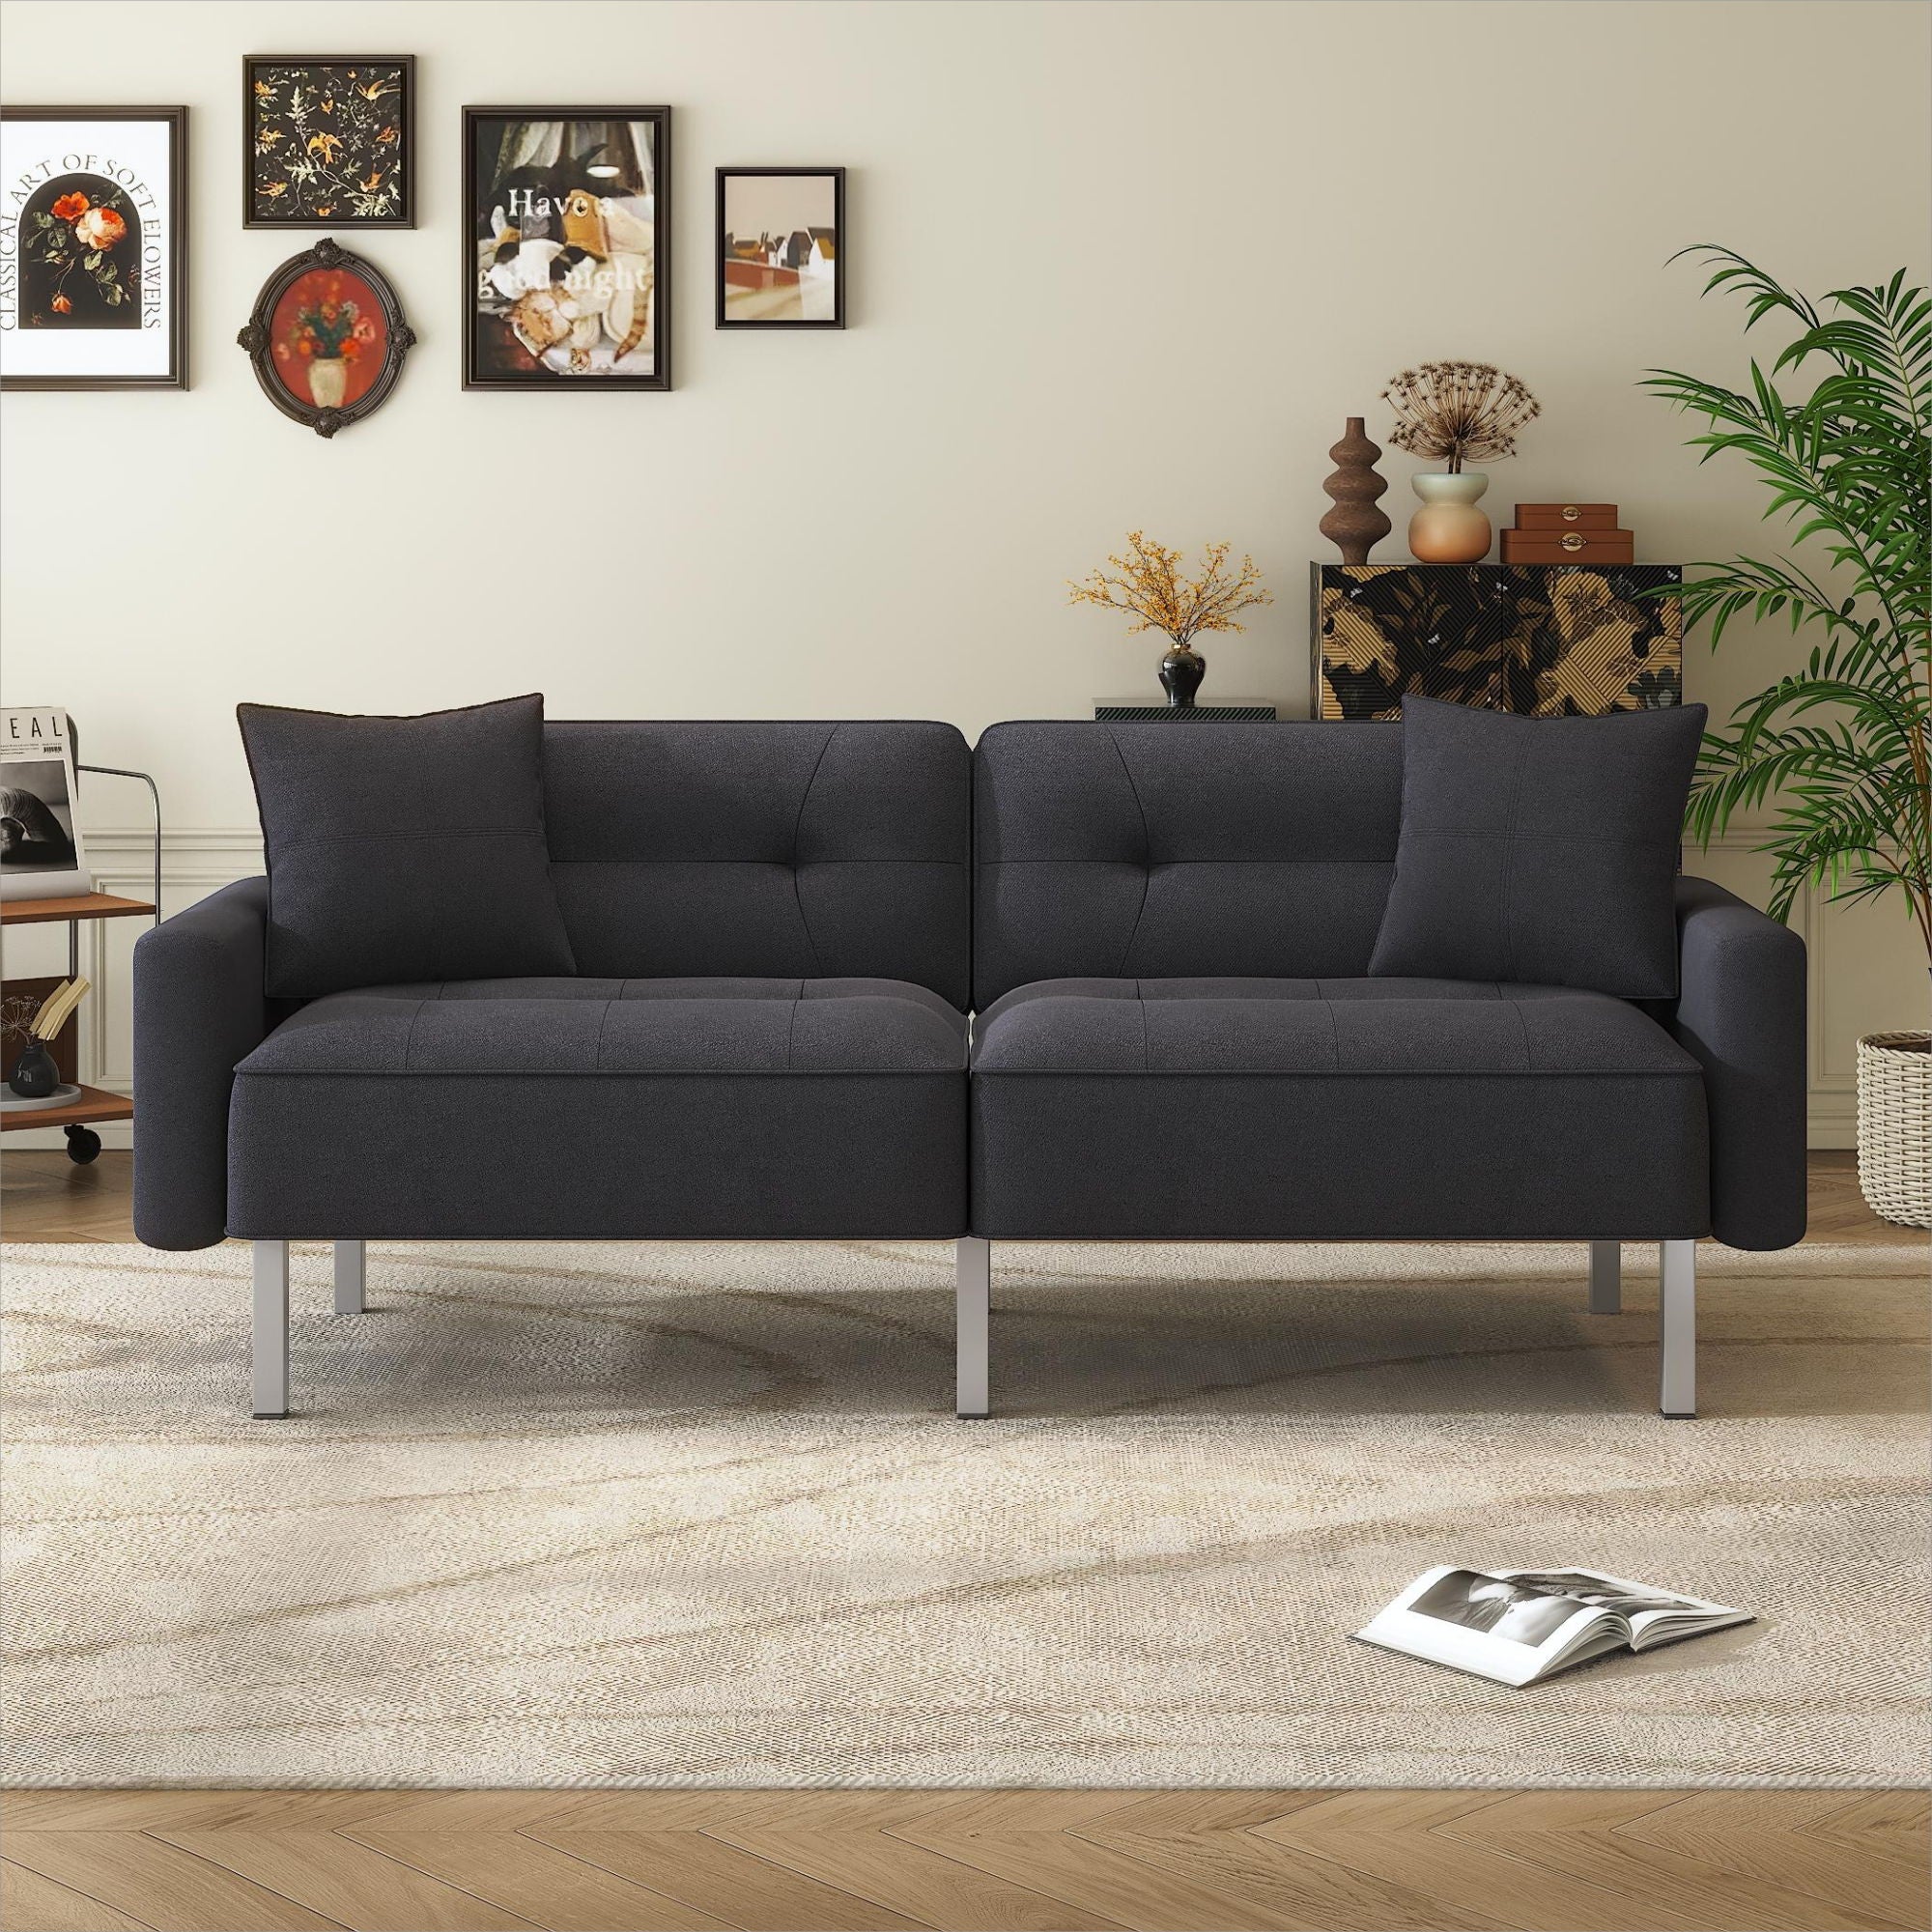 Orisfur - Linen Upholstered Modern Convertible Folding Futon Sofa Bed For Compact Living Space, Apartment, Dorm, Black